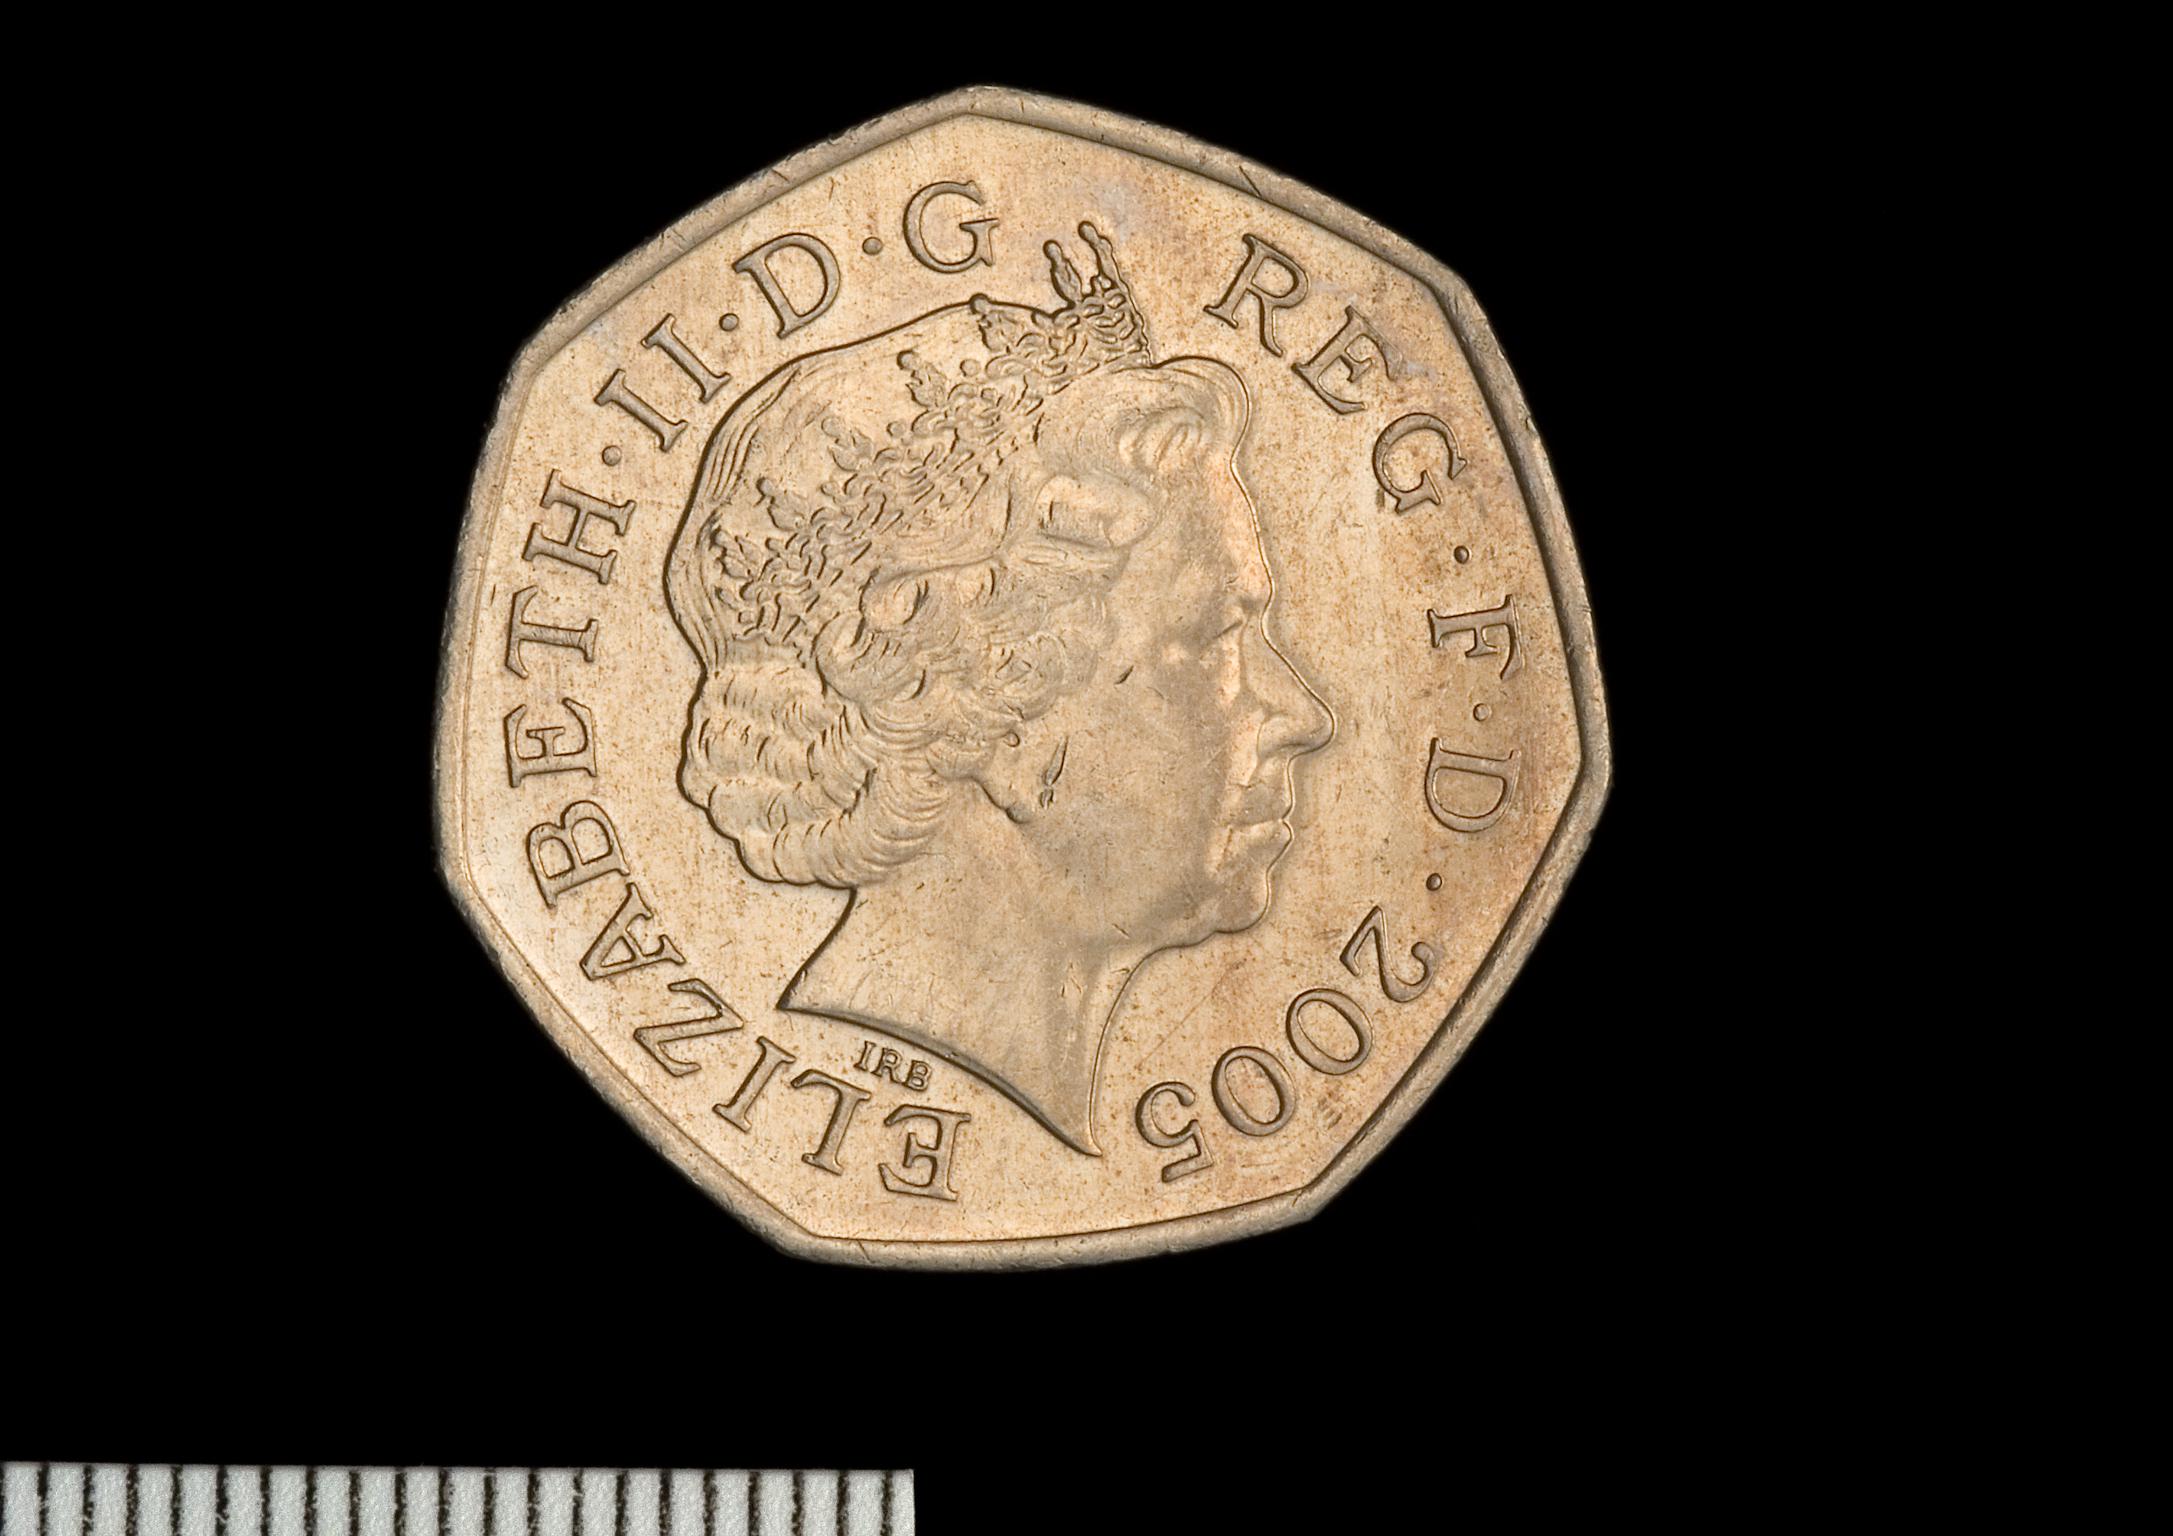 Elizabeth II fifty pence (commemorative)